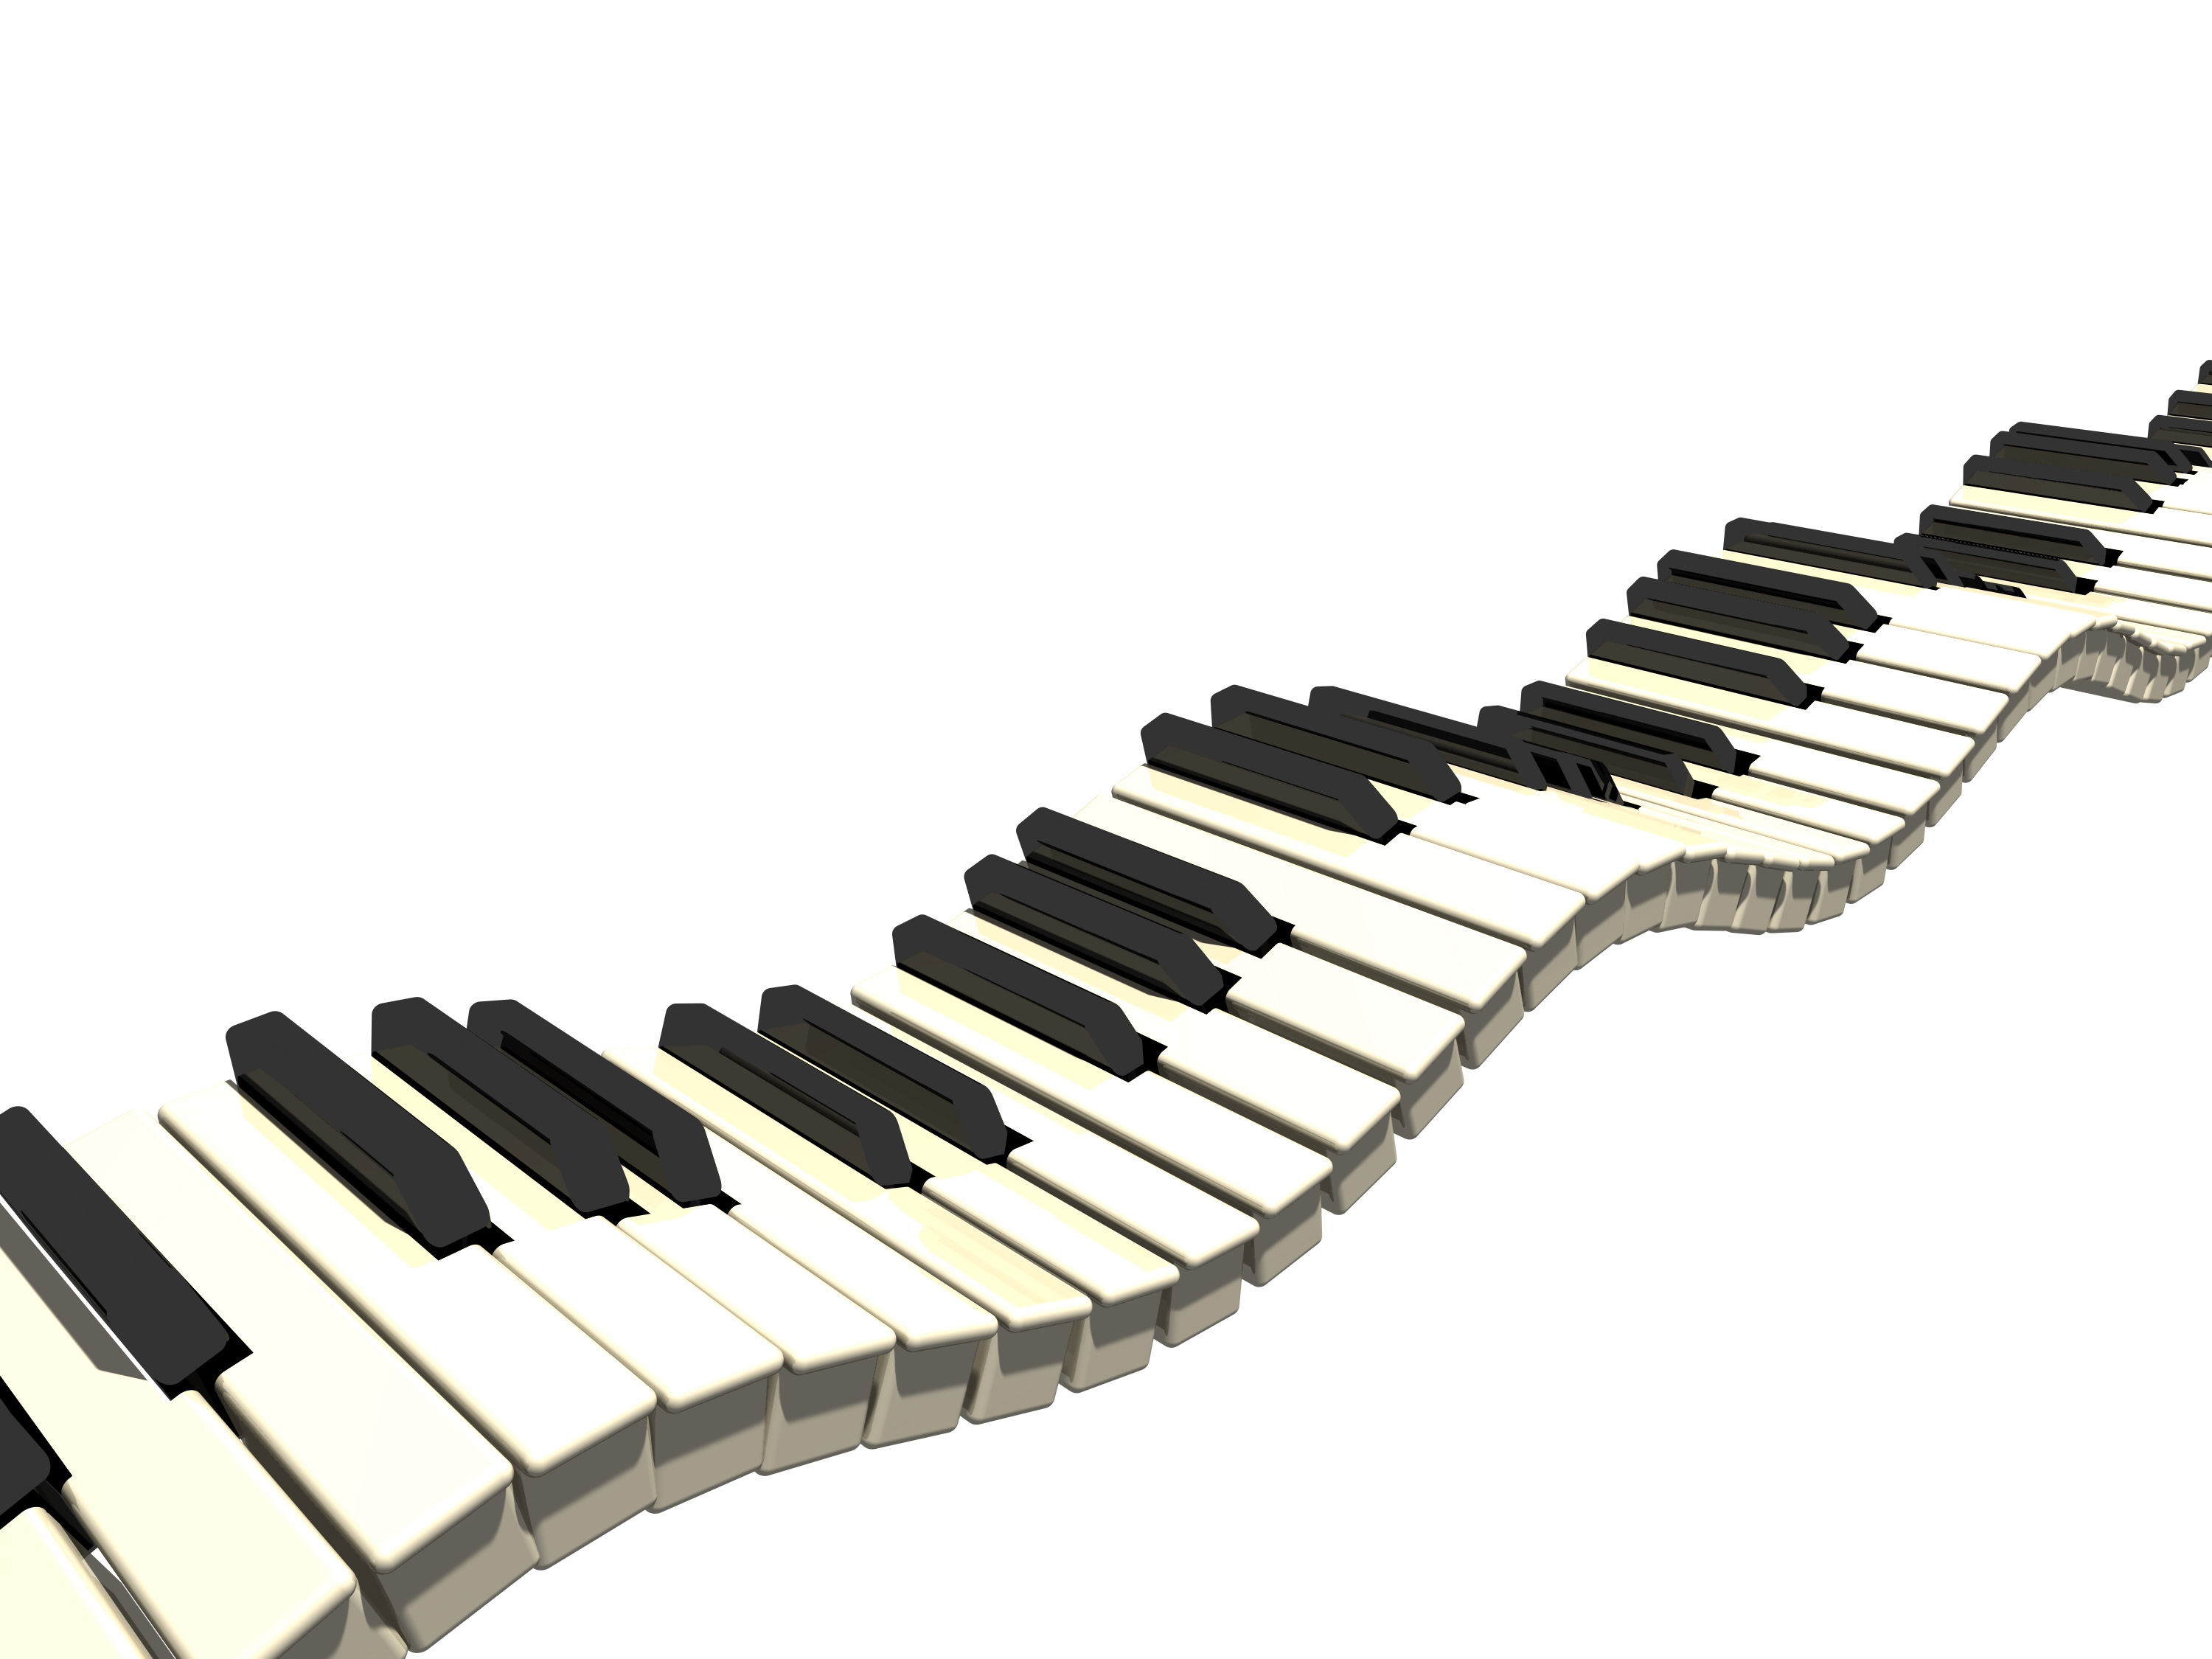 Piano Keyboard Clipart | Free Download Clip Art | Free Clip Art ...